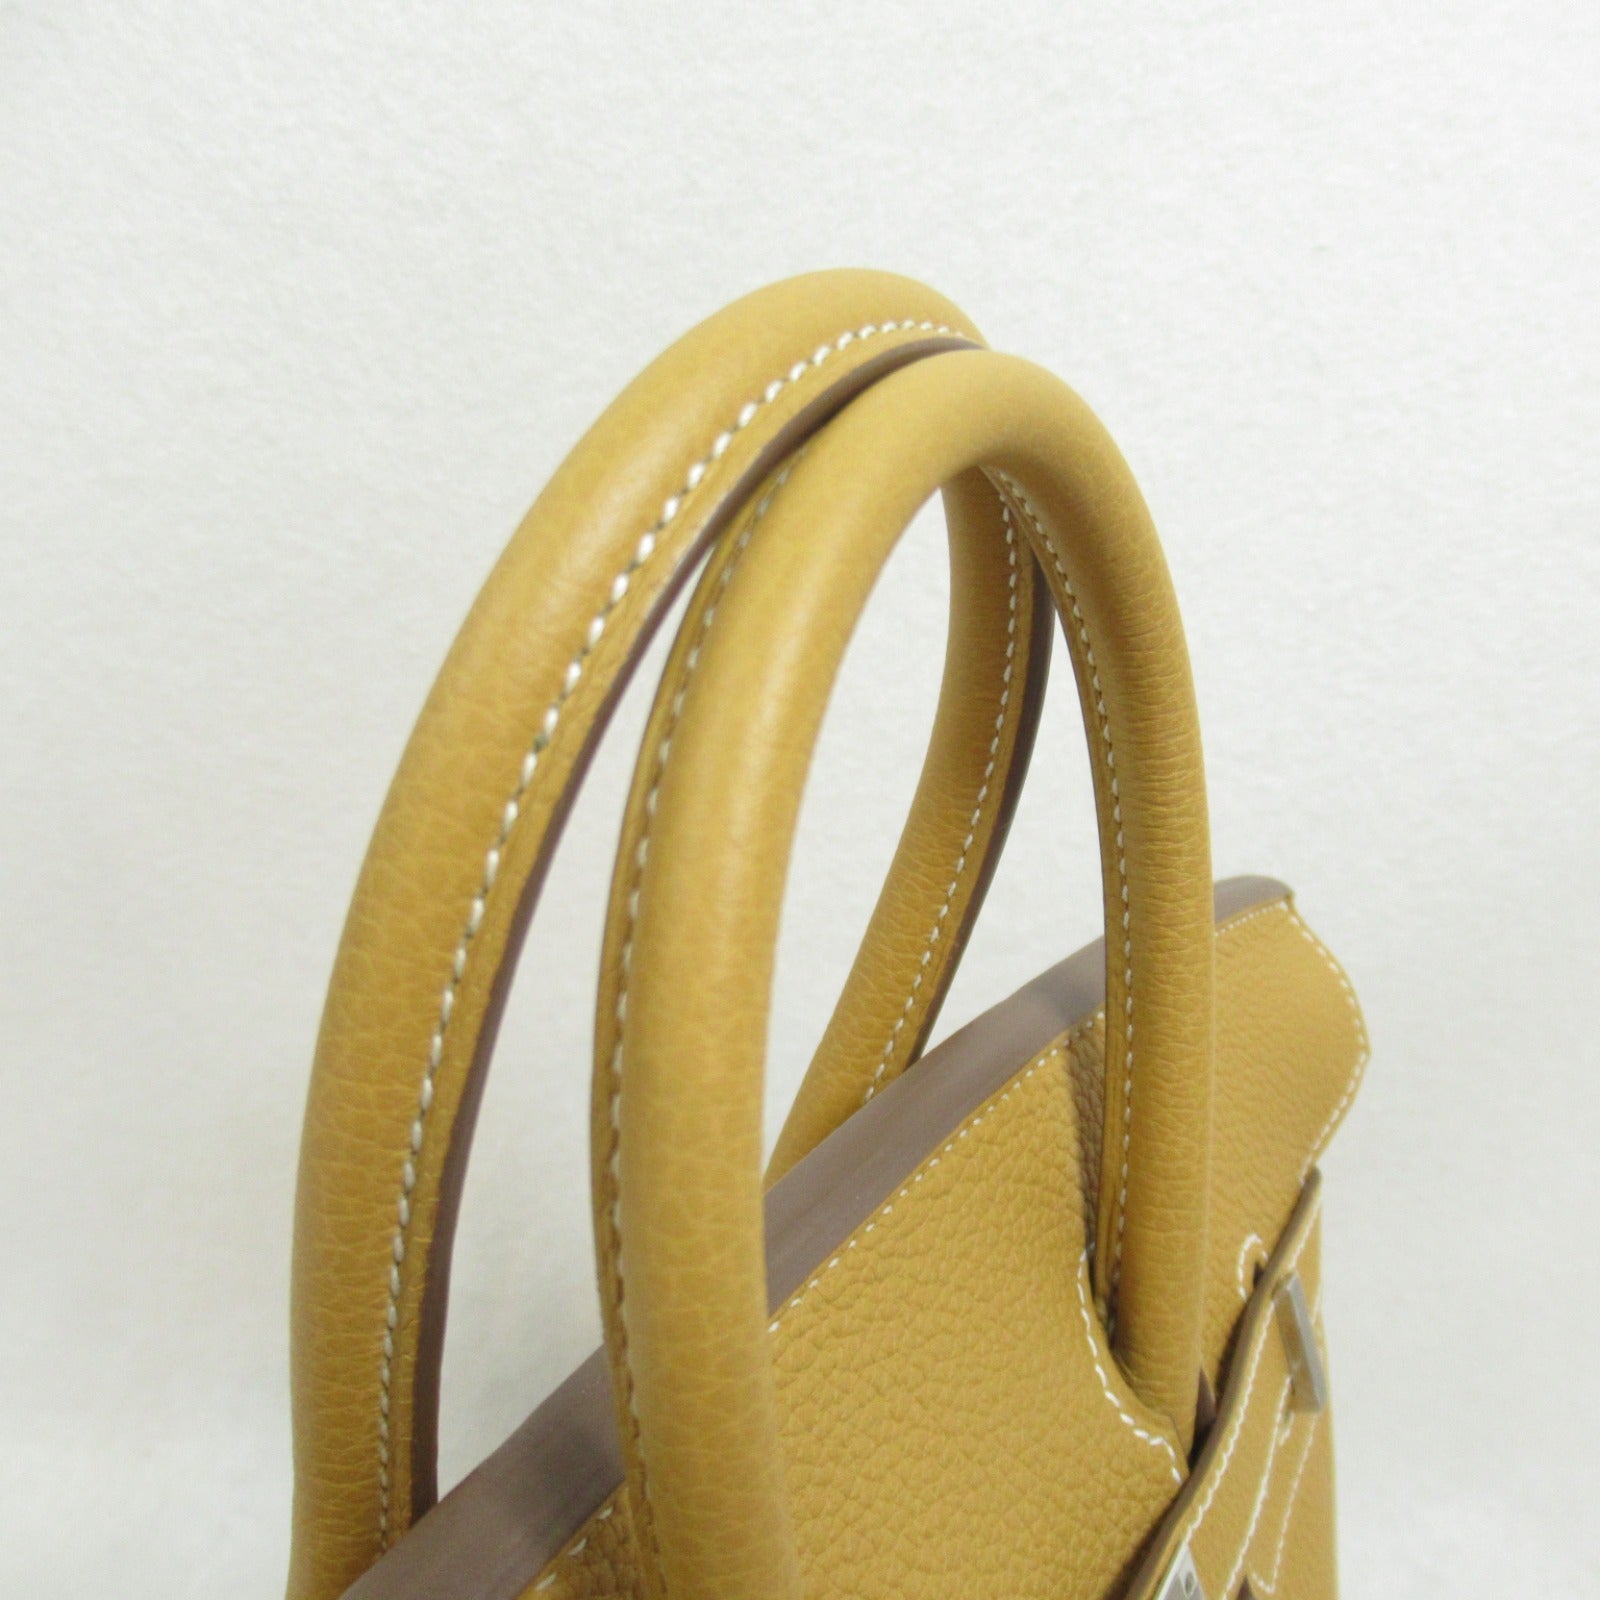 Hermes Birkin 25 Natural Sabrina Handbag Handbag Handbag TOGO LADY'S